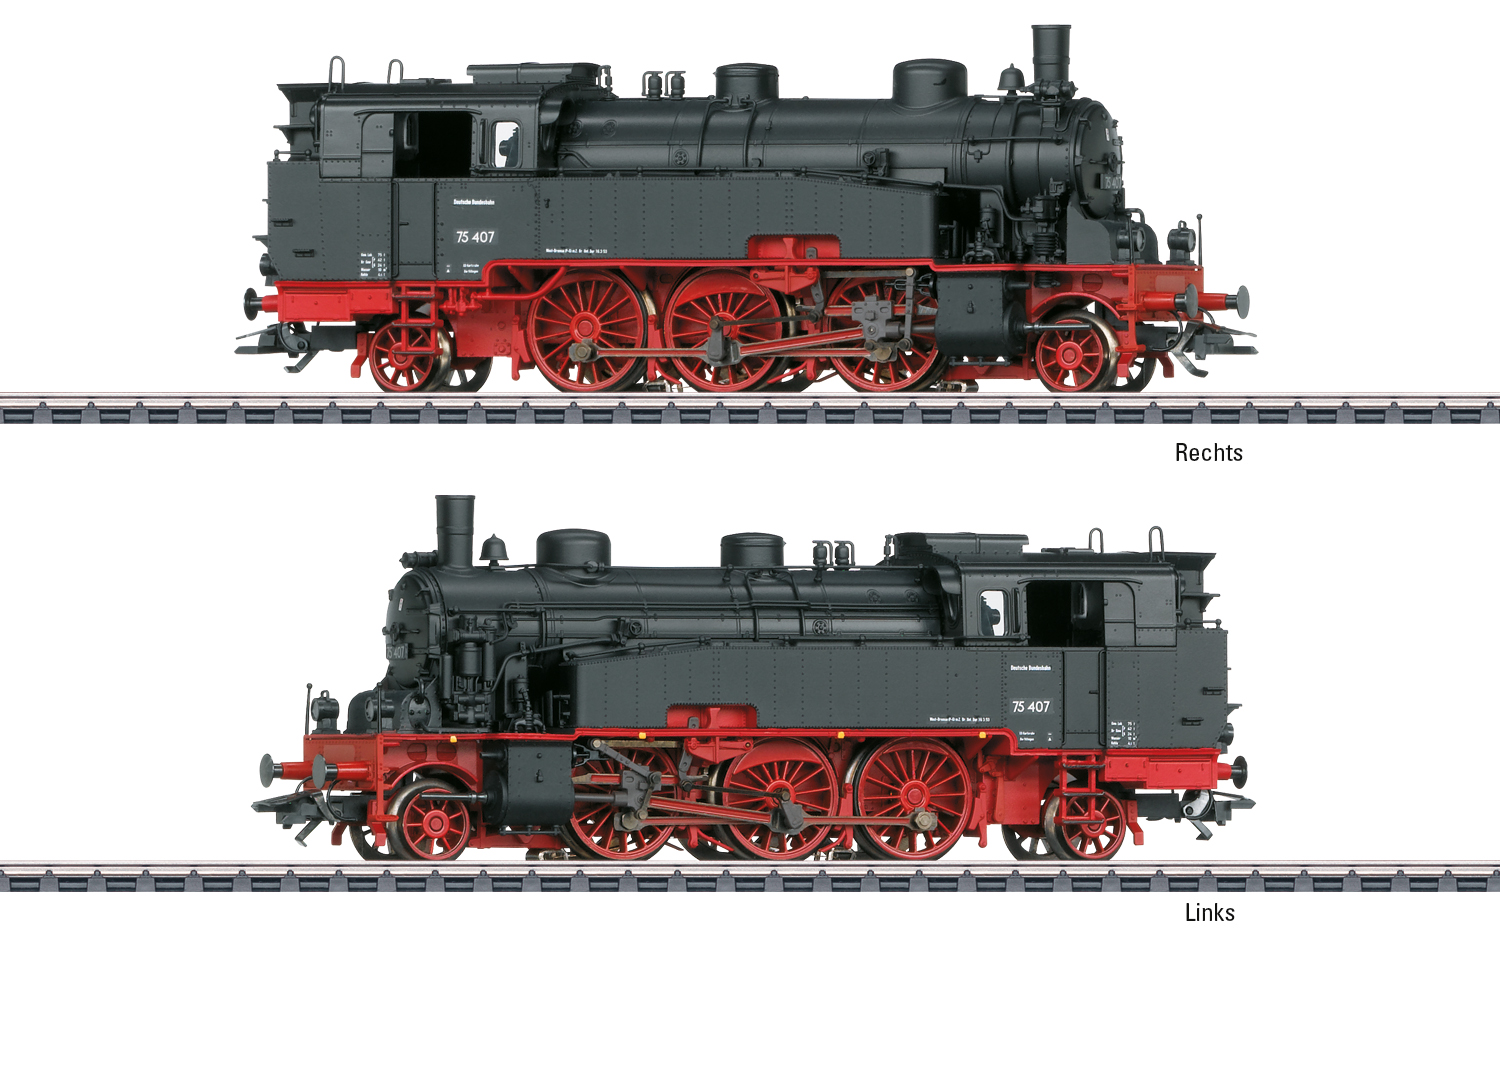 Märklin 39754 Dampflokomotive Baureihe 75.4 Dampflokomotive Baureihe 75.4